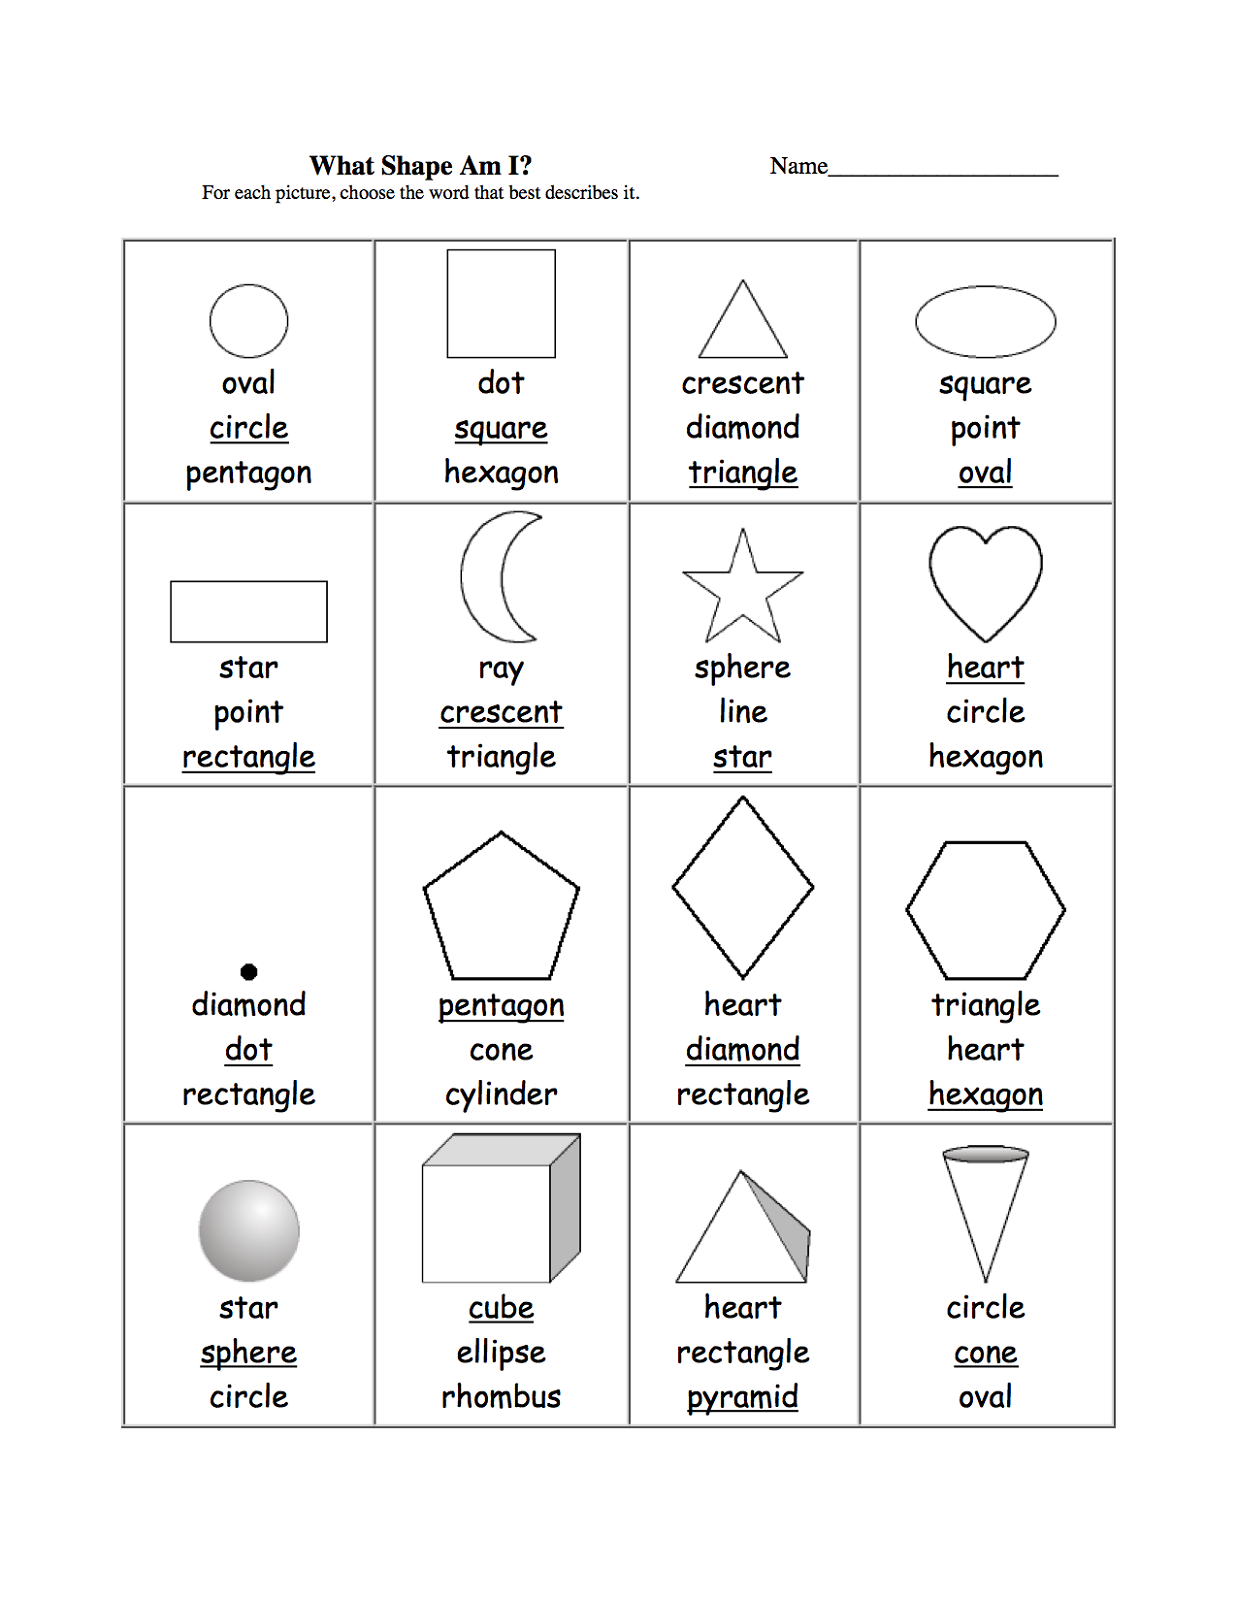 4-free-preschool-spanish-shapes-matching-worksheets-supplyme